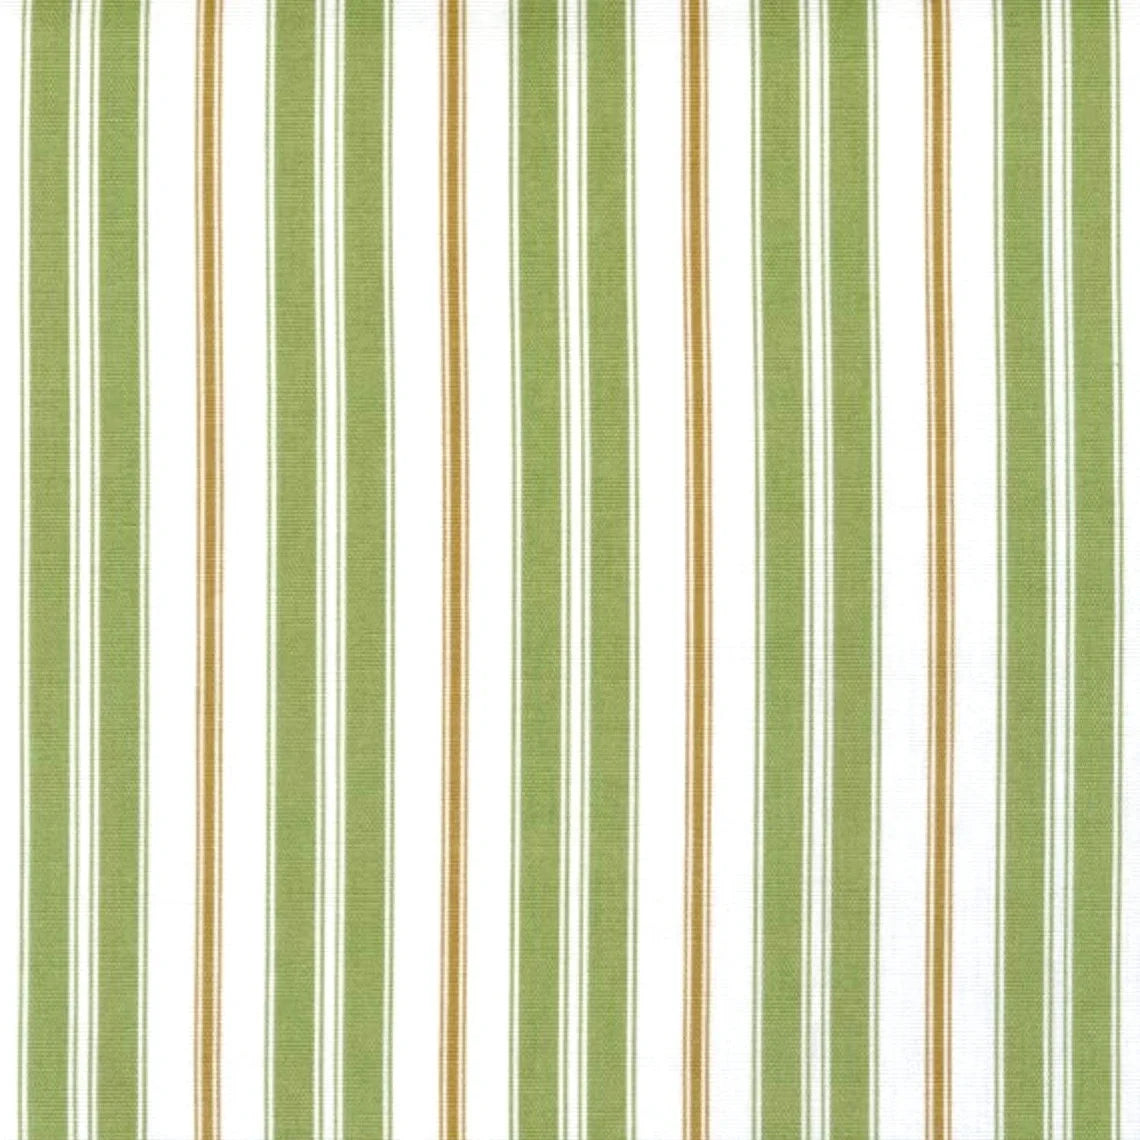 decorative pillows in newbury aloe green stripe- green, brown, white